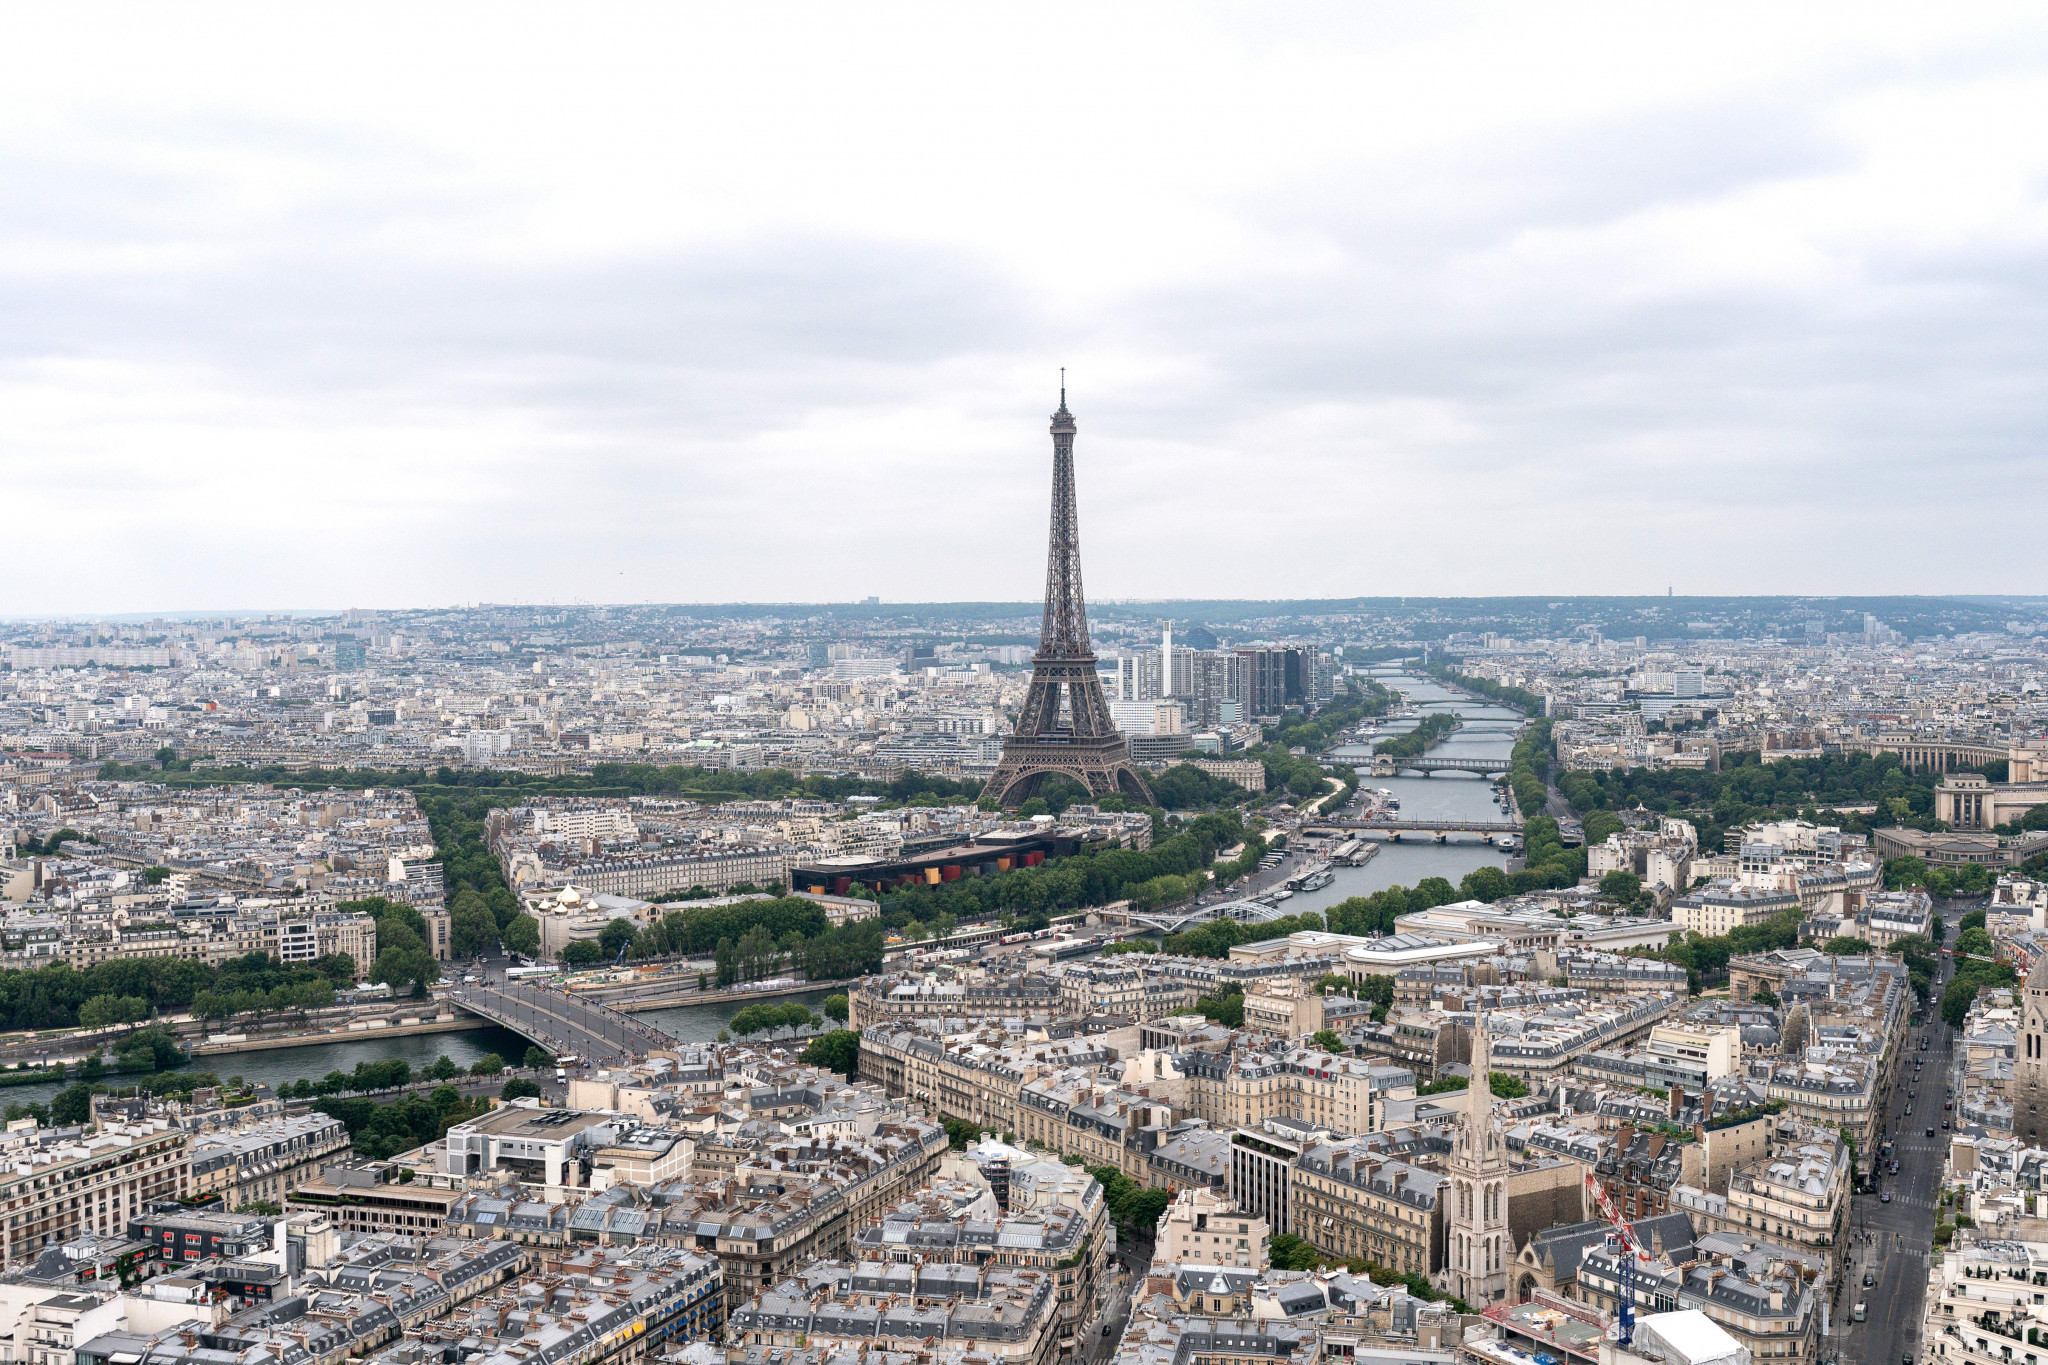 BysteelFS has been commissioned to construct the Porte de la Chapelle's Paris 2024 façade ©Getty Images